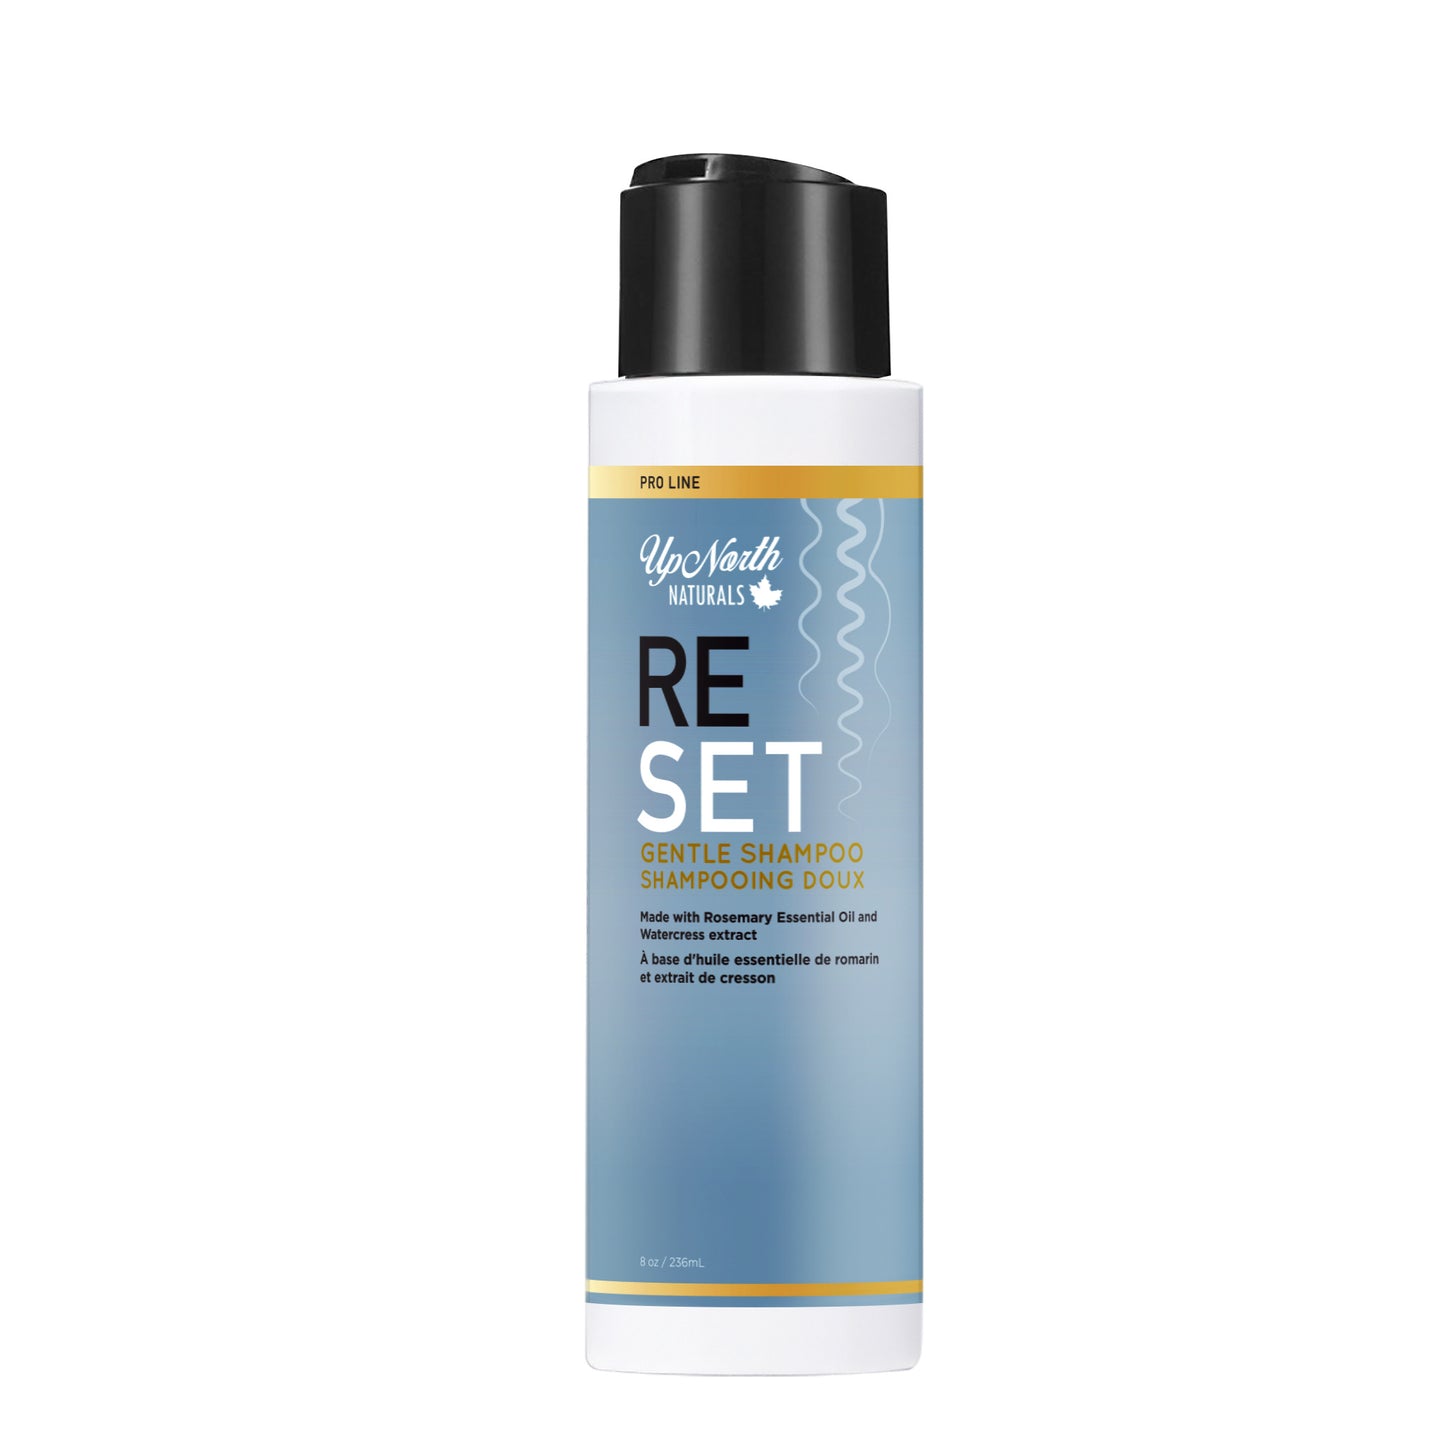 Pro Line RESET | Gentle Shampoo  